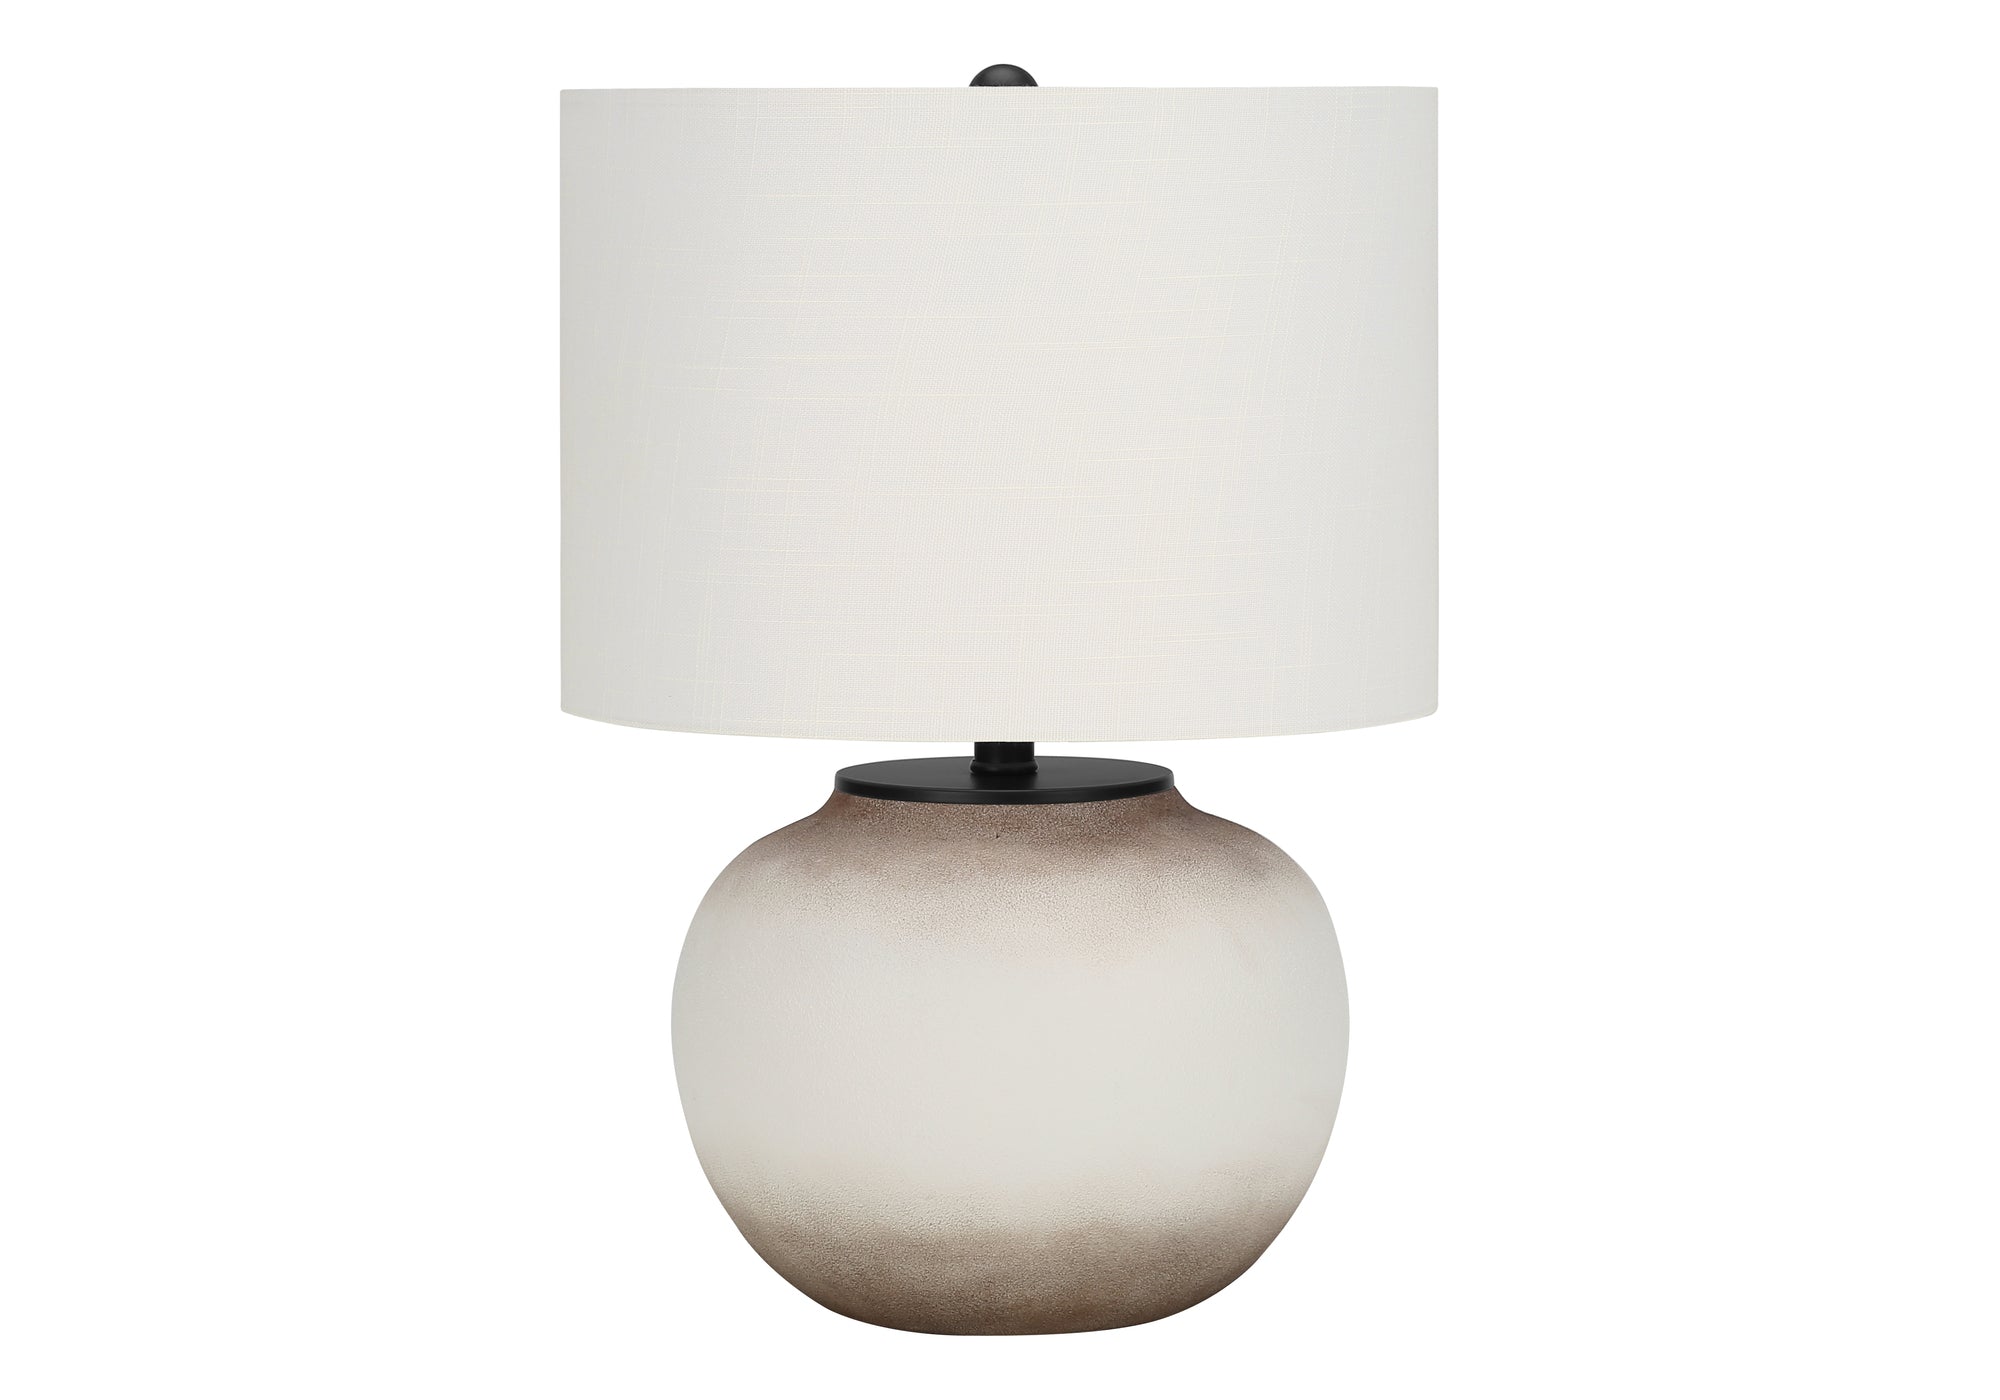 MN-569722    Lighting, 21"H, Table Lamp, Cream Ceramic, Ivory / Cream Shade, Modern